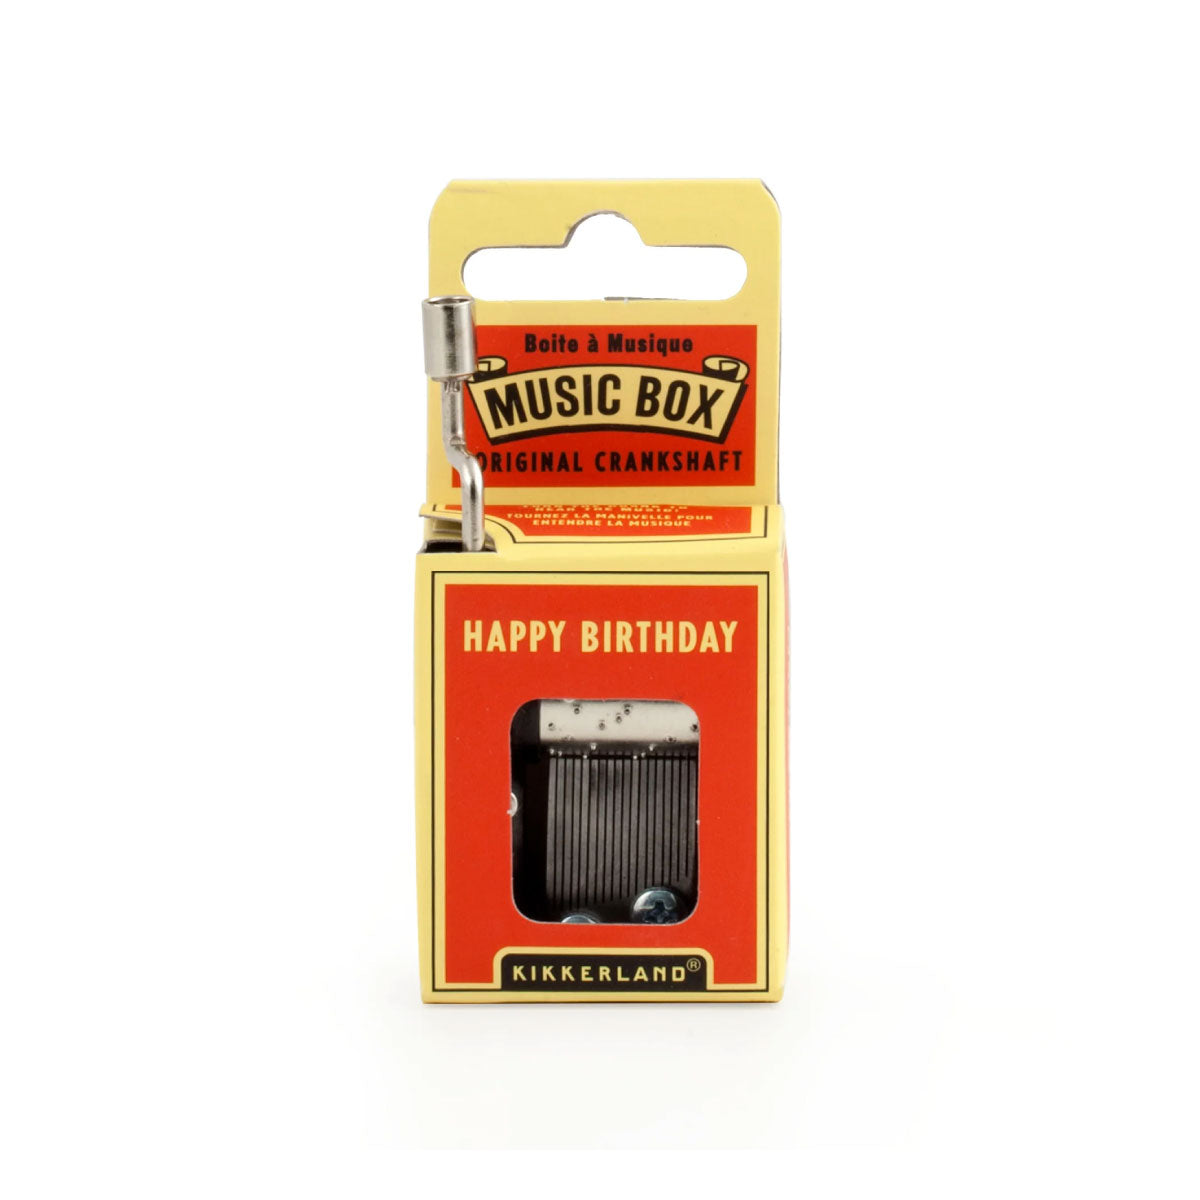 Happy Birthday Original Crankshaft Music Box from Kikkerland